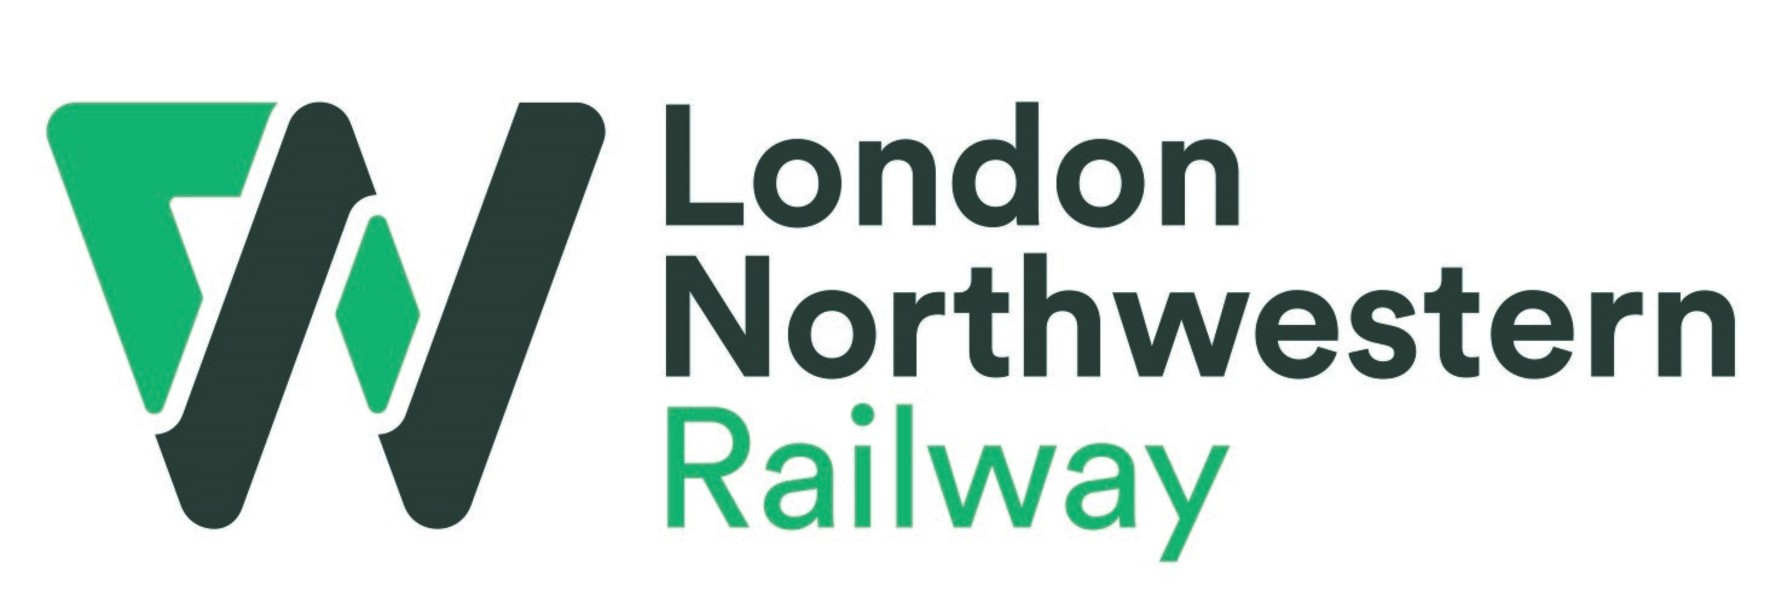 London Northwestern Railway: Passengers urged to check journeys ahead of industrial action next week